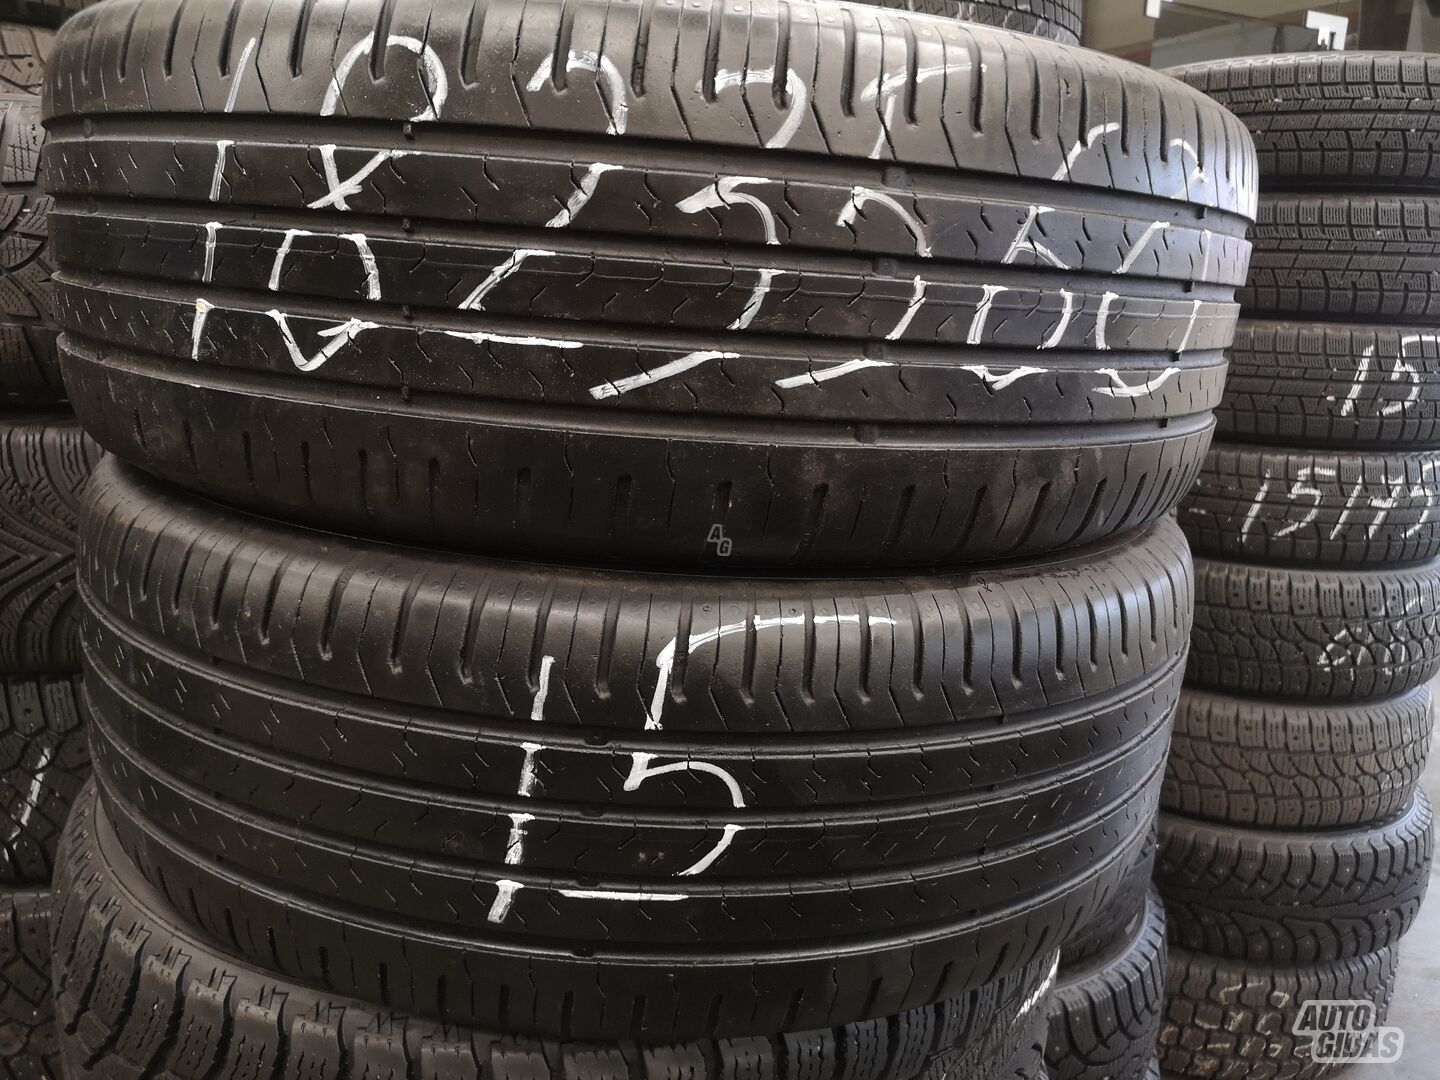 R18 summer tyres passanger car